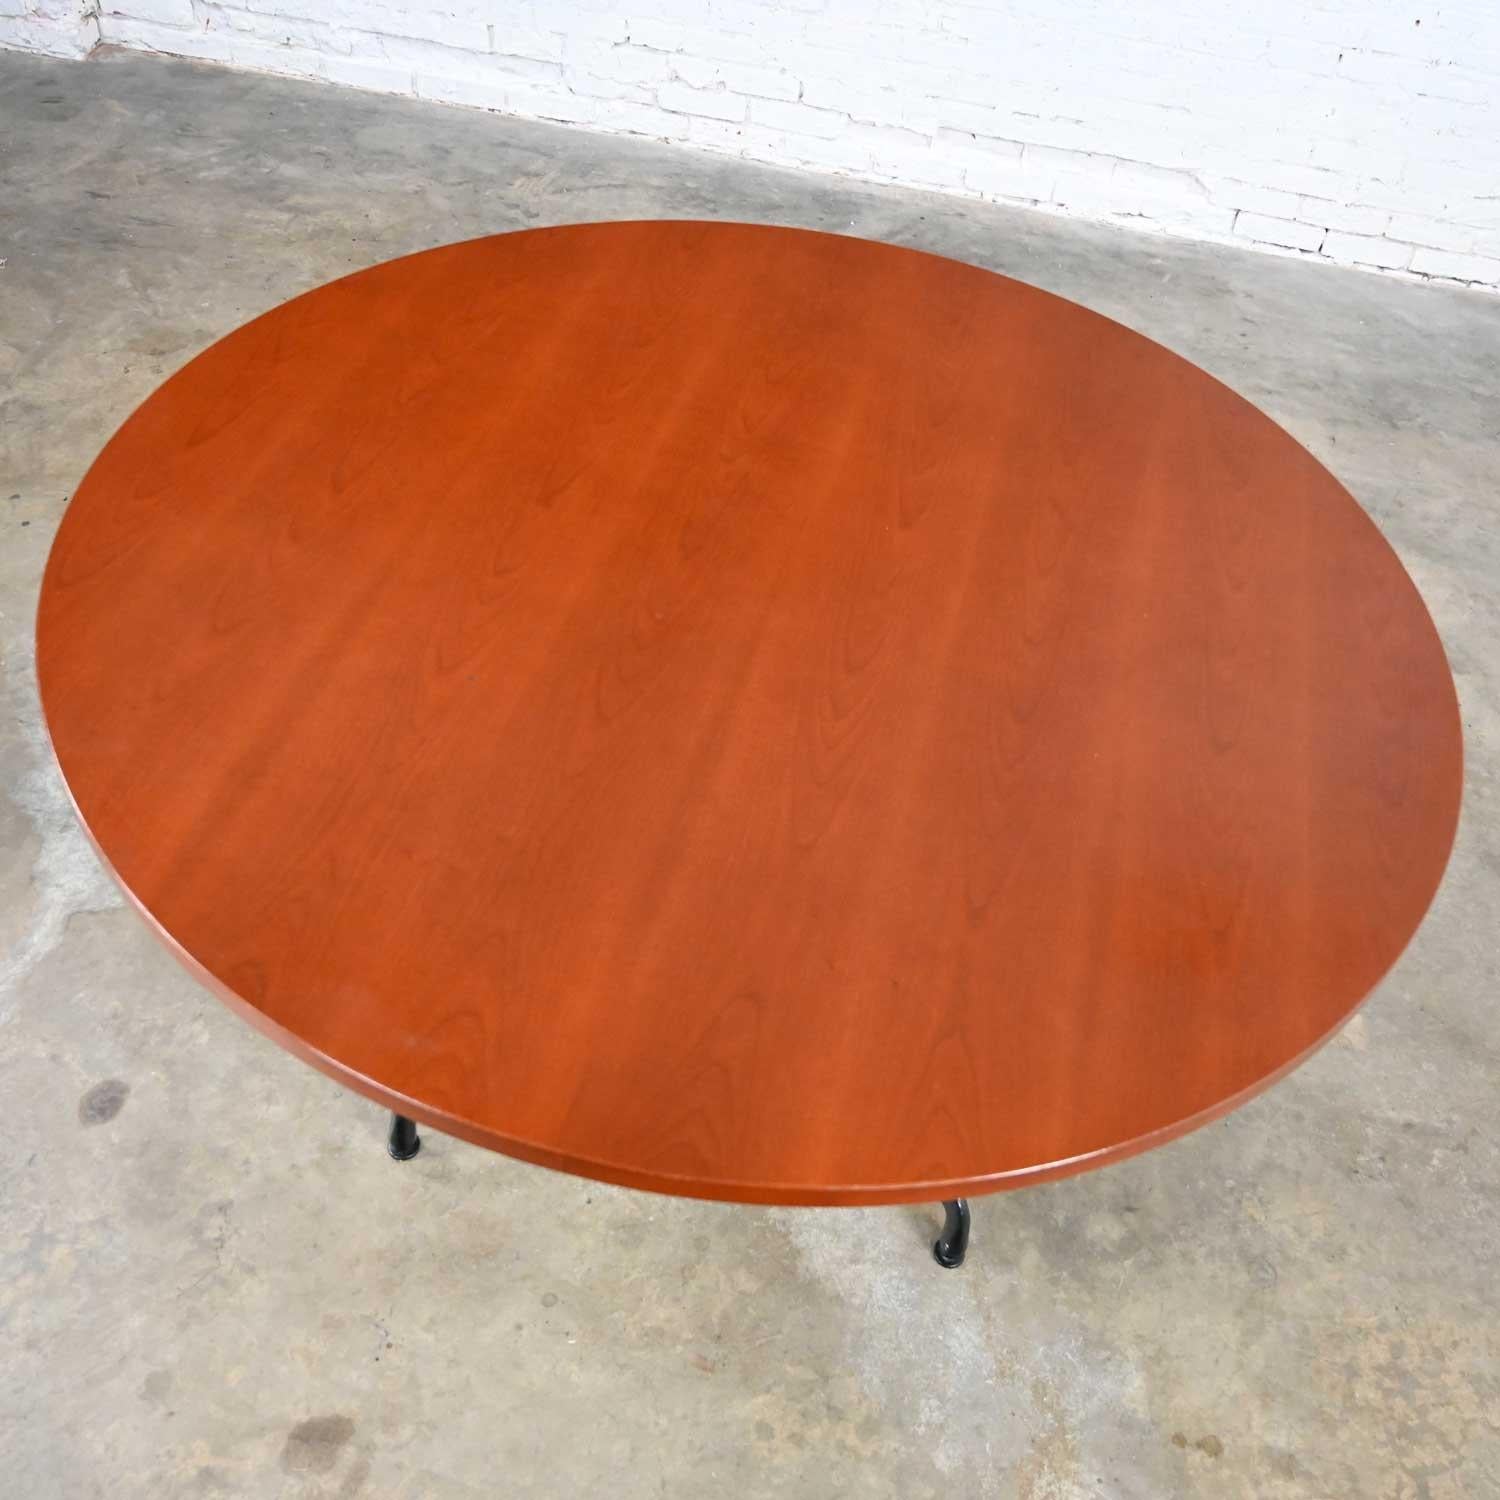 Aluminum Eames Herman Miller Dark Cherry Round Top Table Universal Pedestal Base For Sale